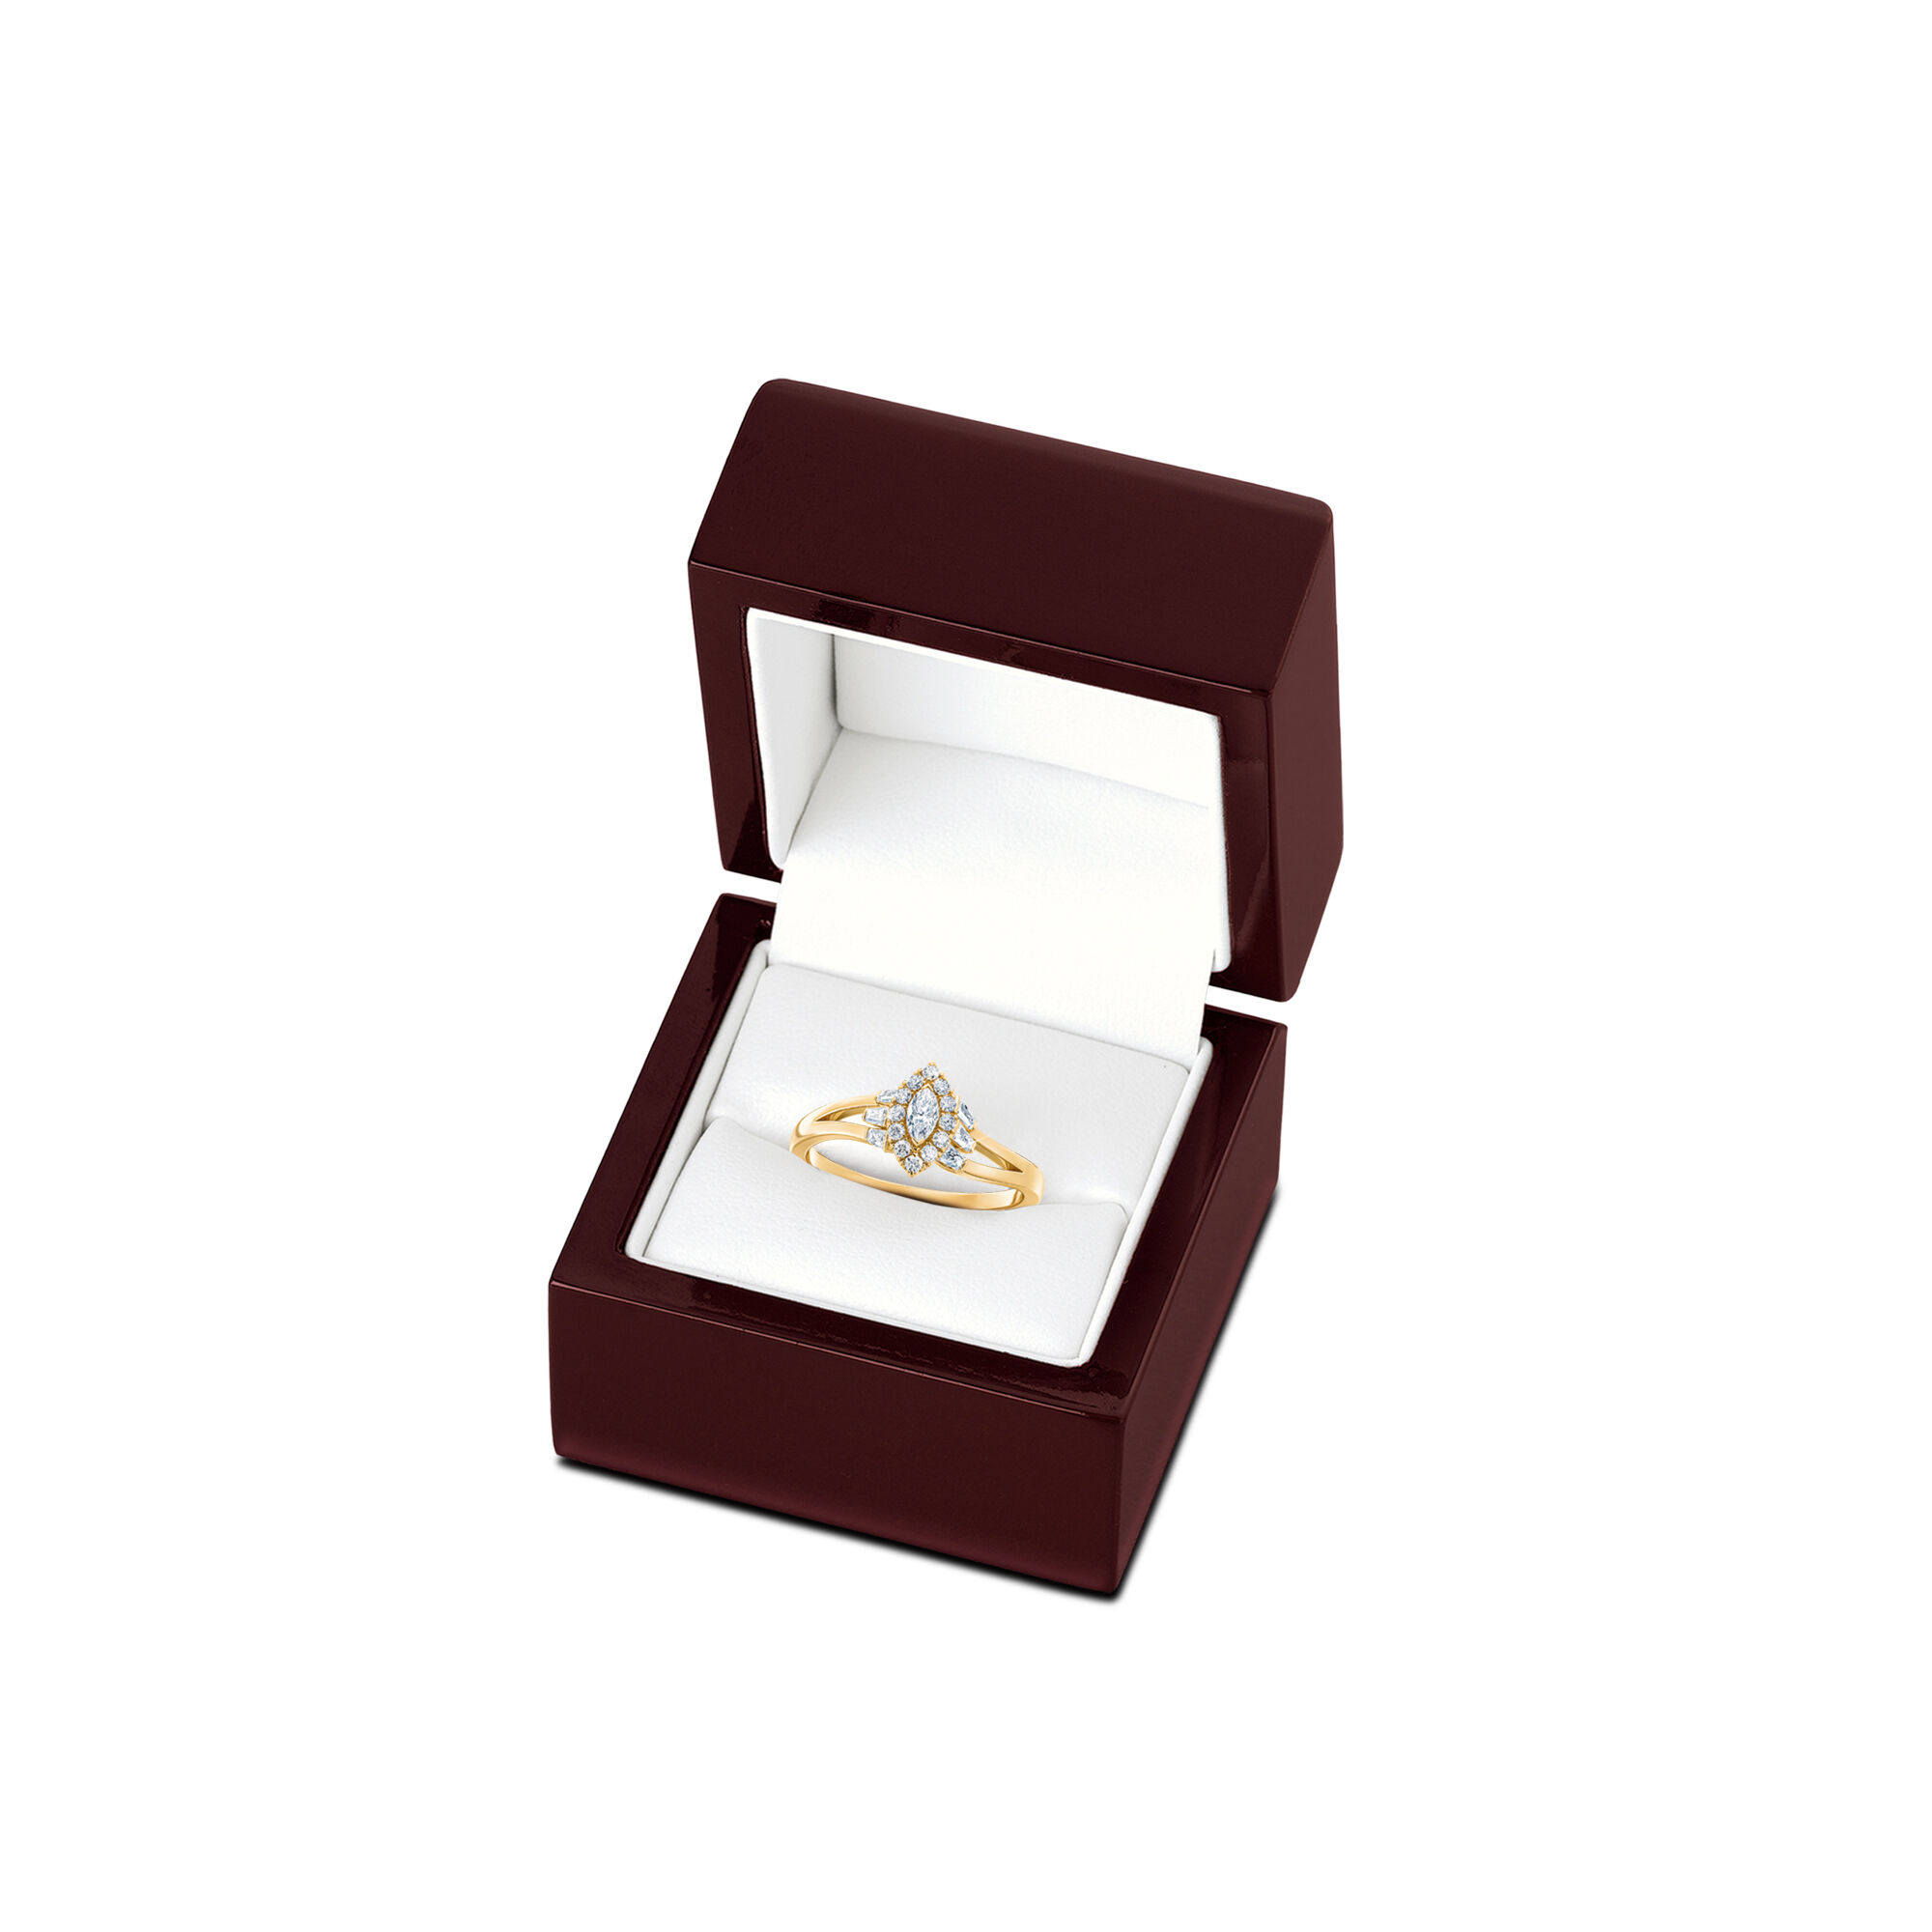 Marquise Majesty Diamond Ring 2147 0059 g gift box